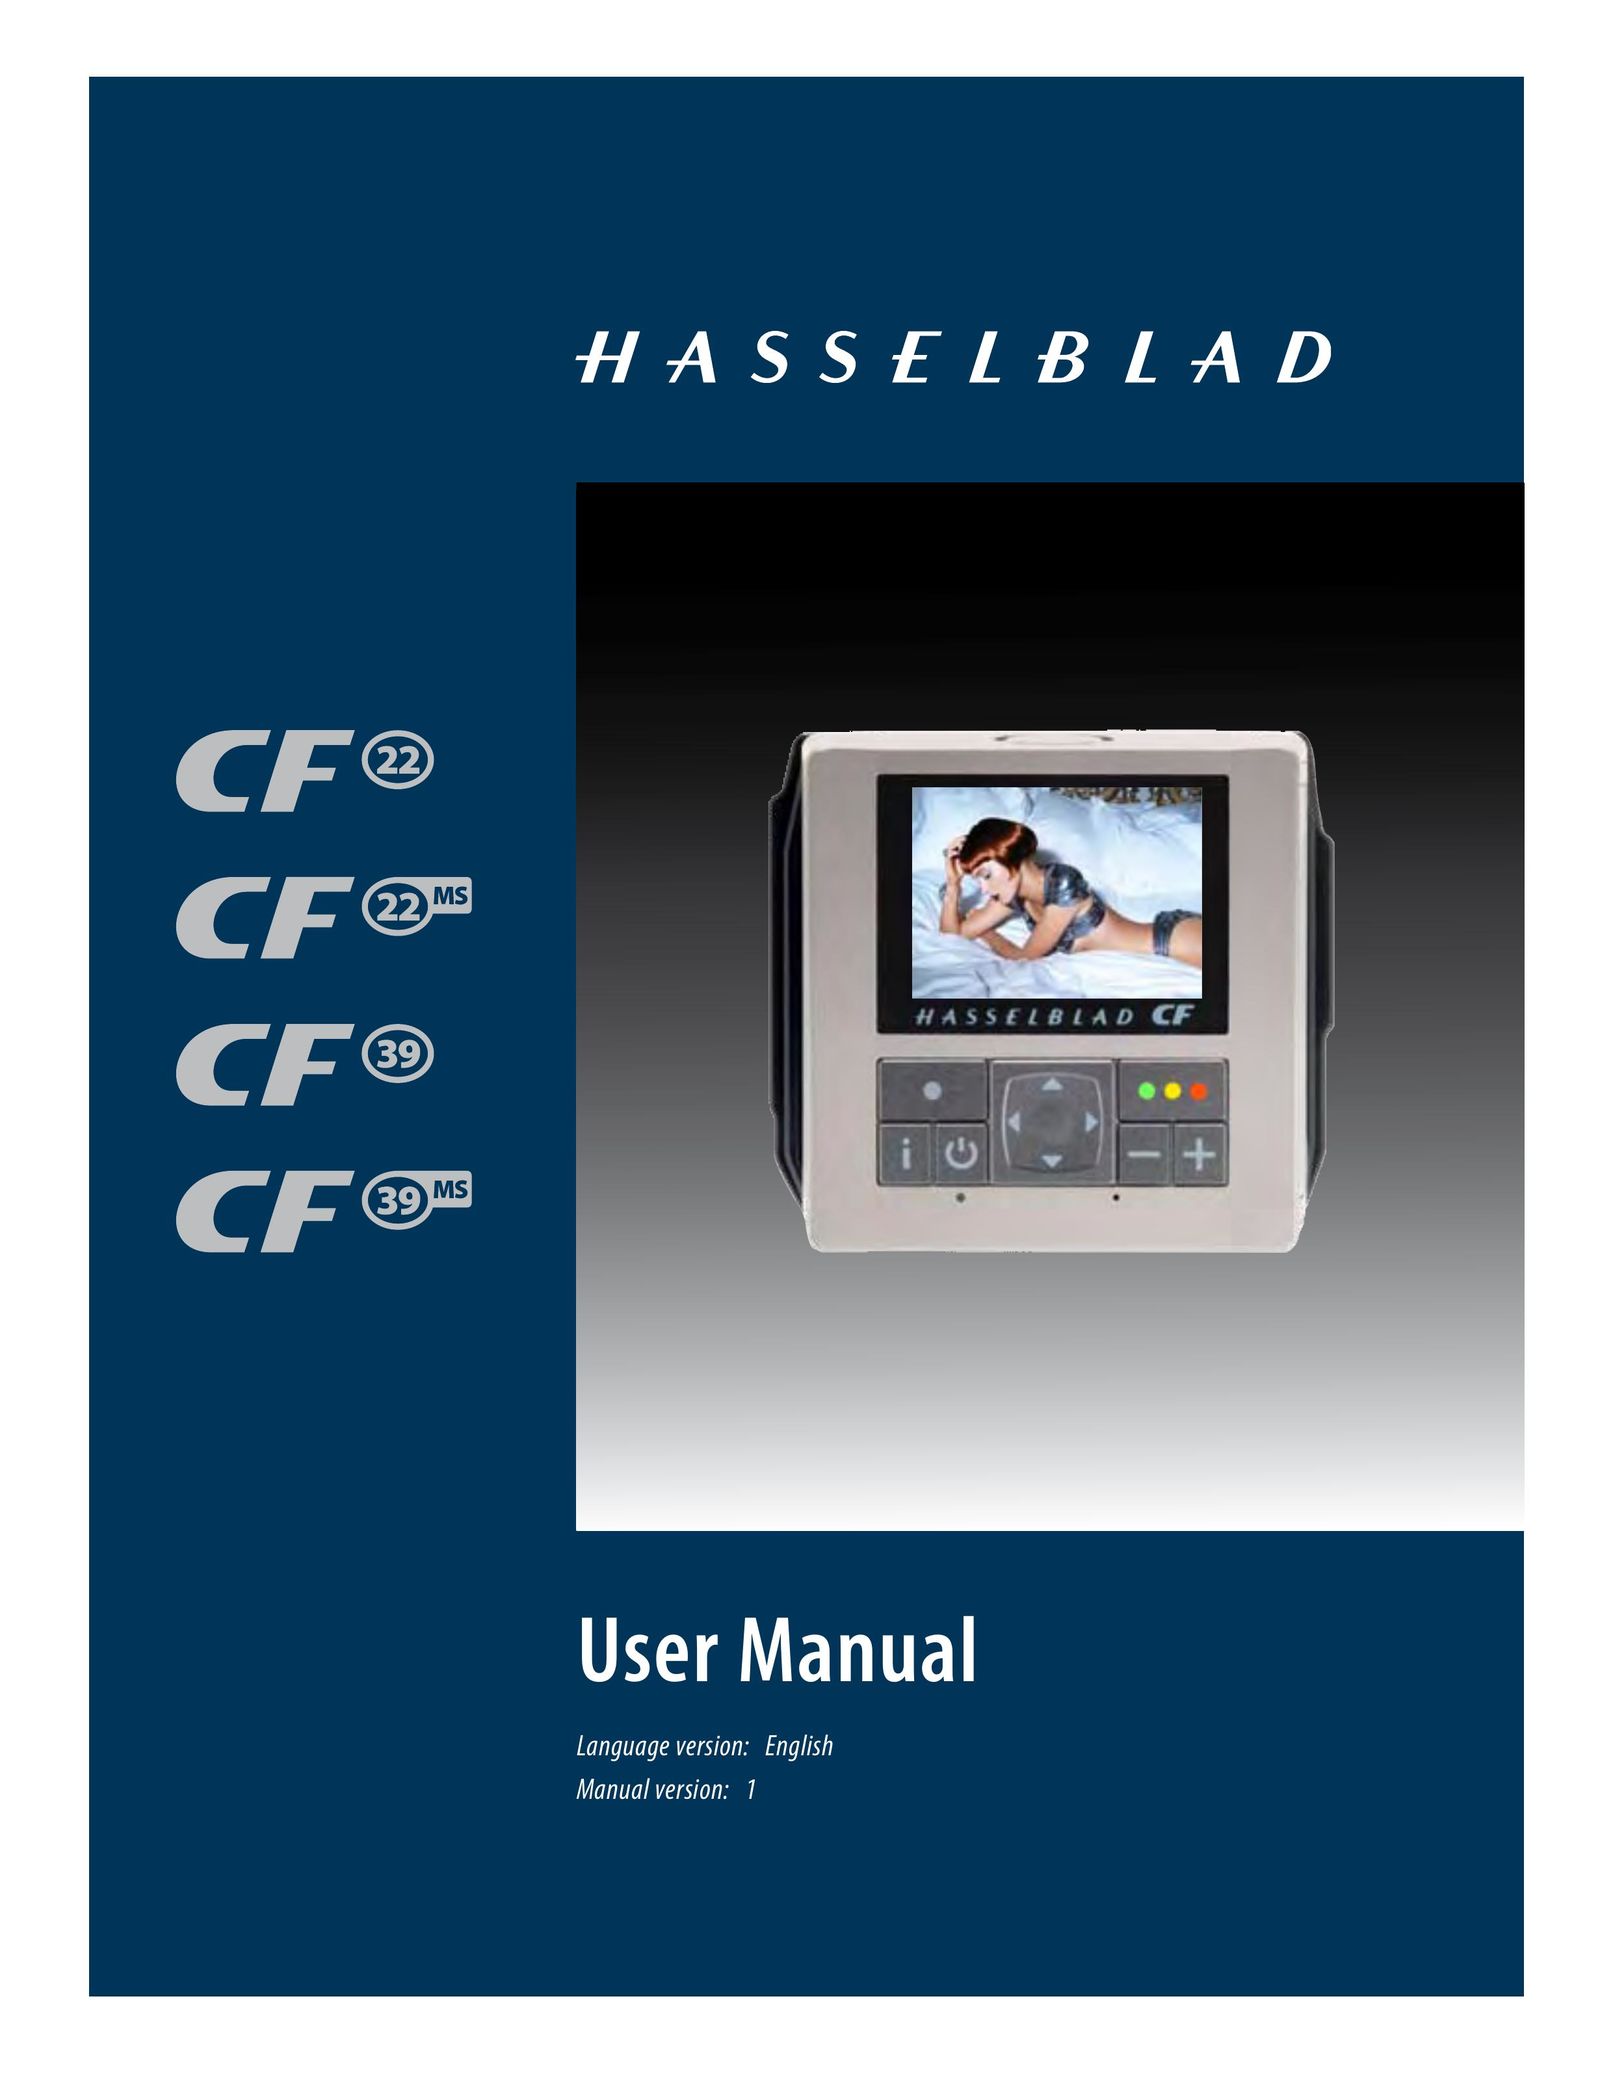 Hasselblad CF22 CF39 Car Video System User Manual